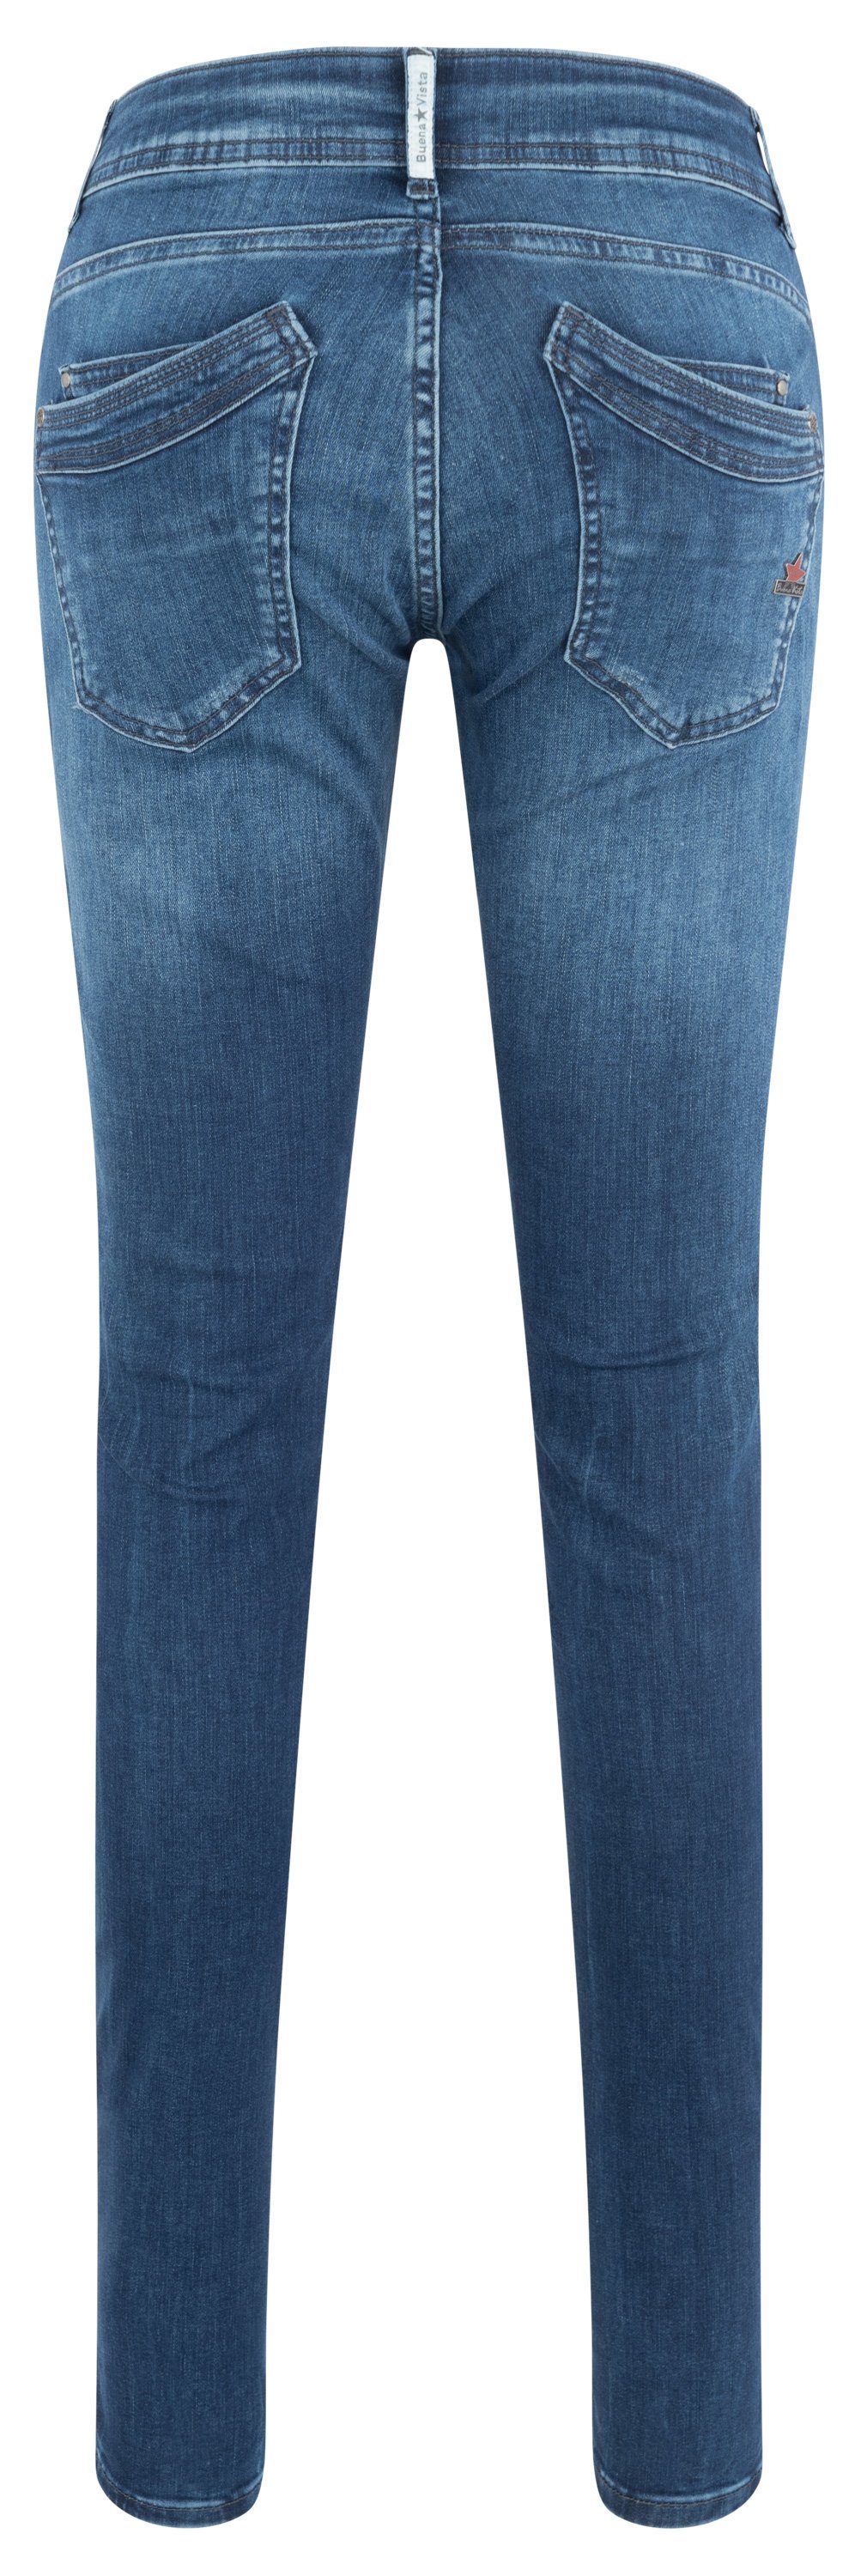 Denim 402.5097 blue - B5001 Stretch-Jeans MALIBU Cozy VISTA Vista vintage 2210 BUENA Buena